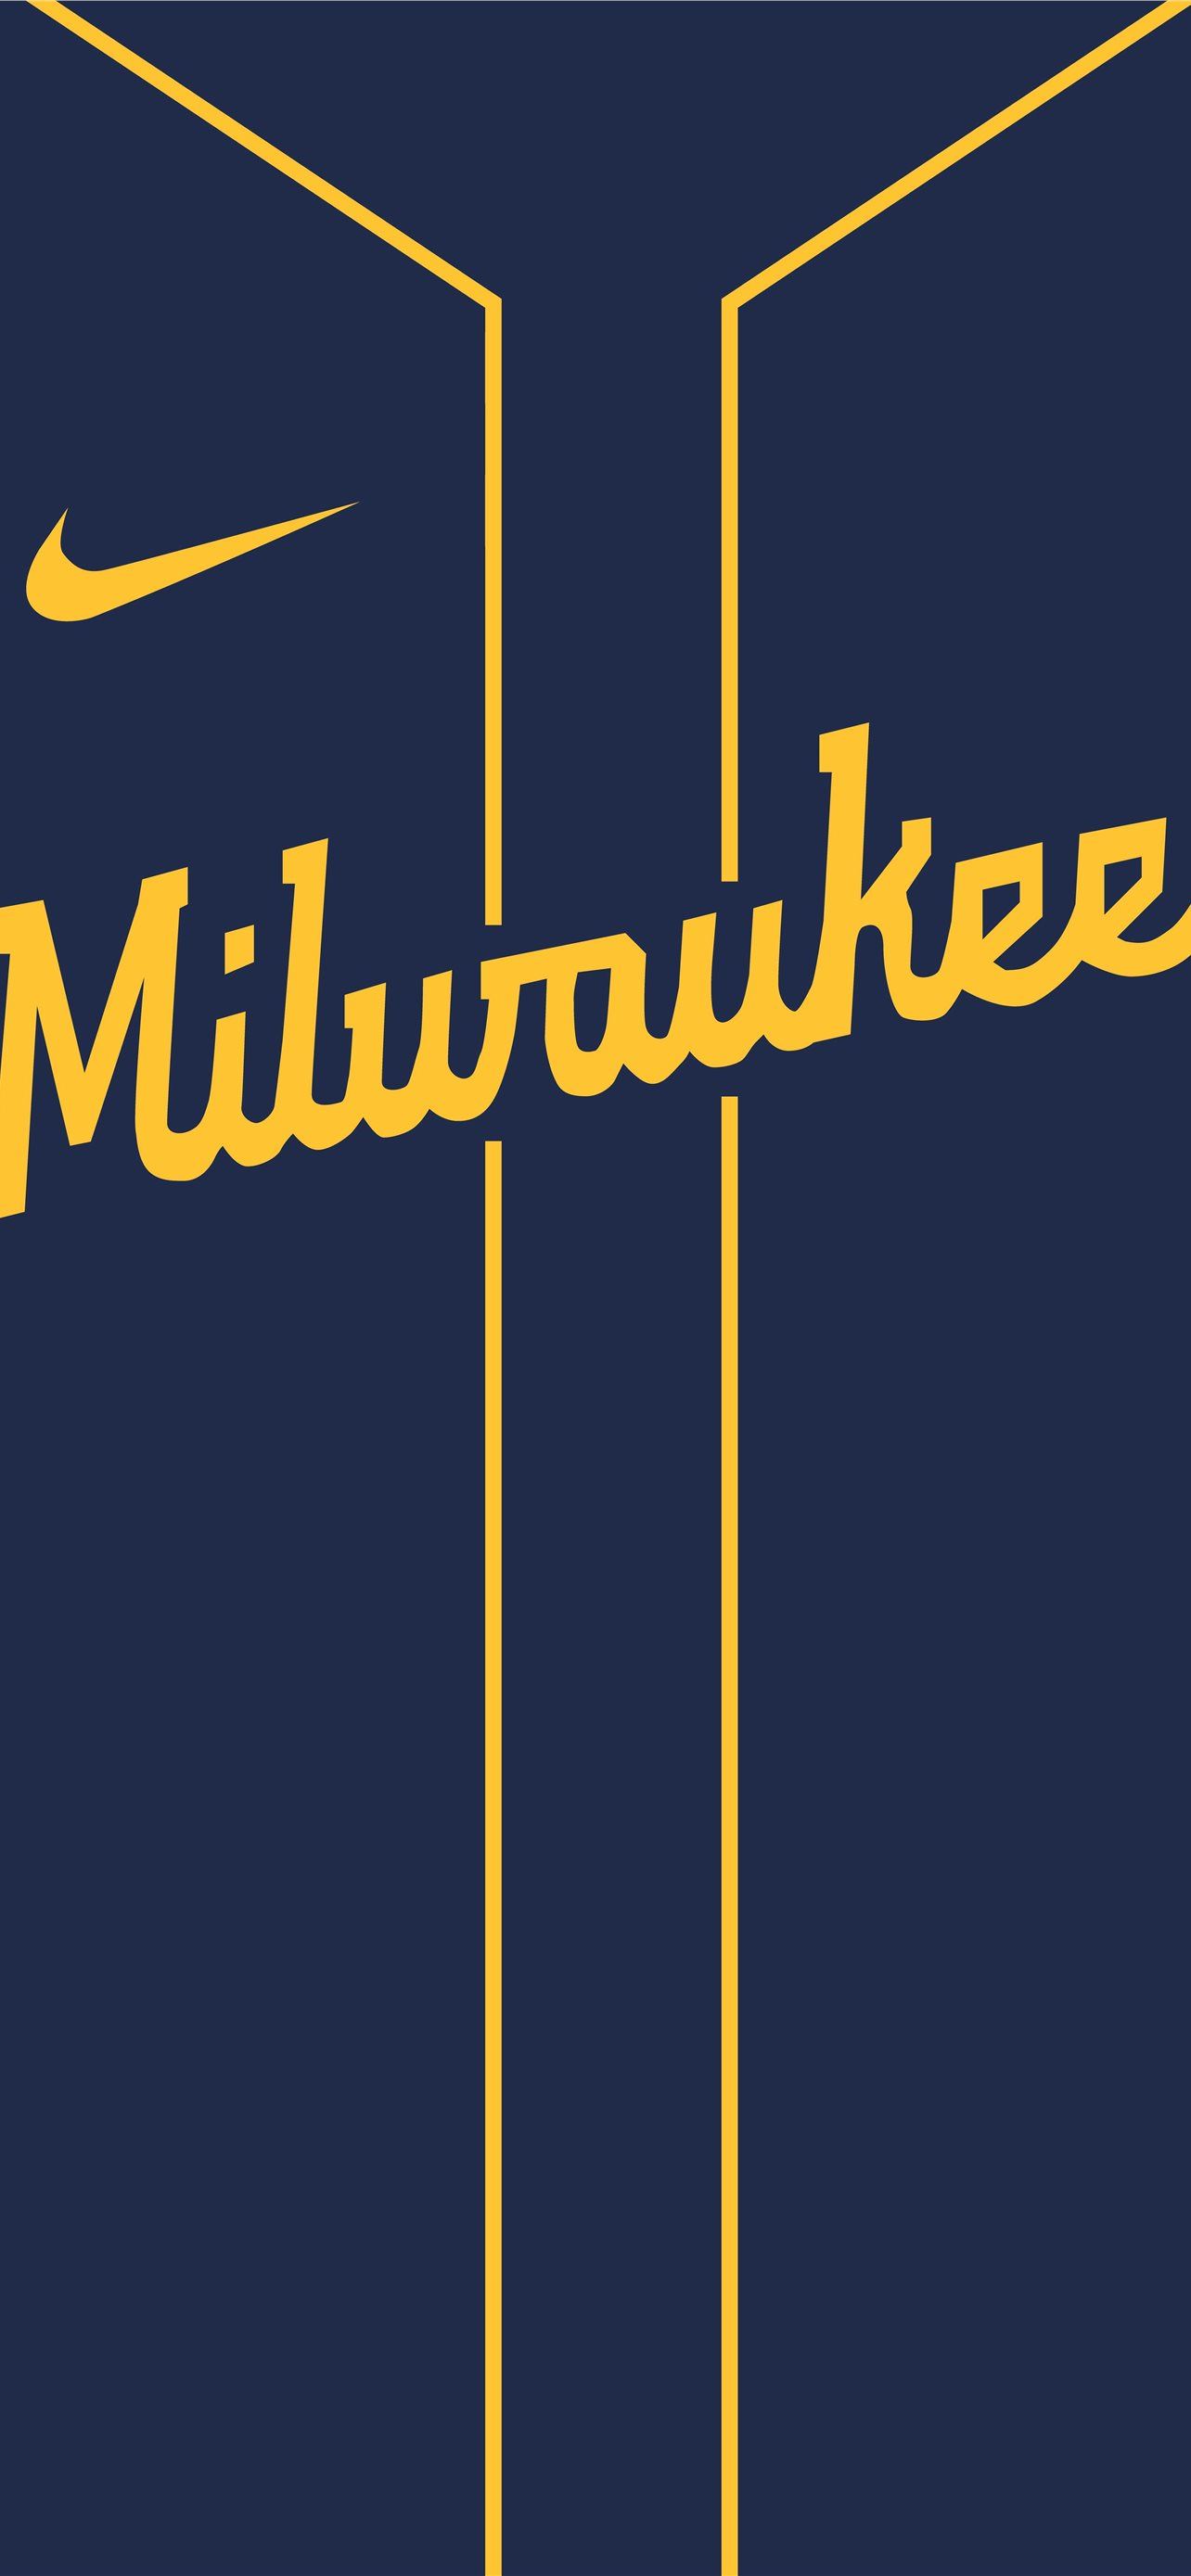 Milwaukee Brewers named Baseball Americas Organization of the Year